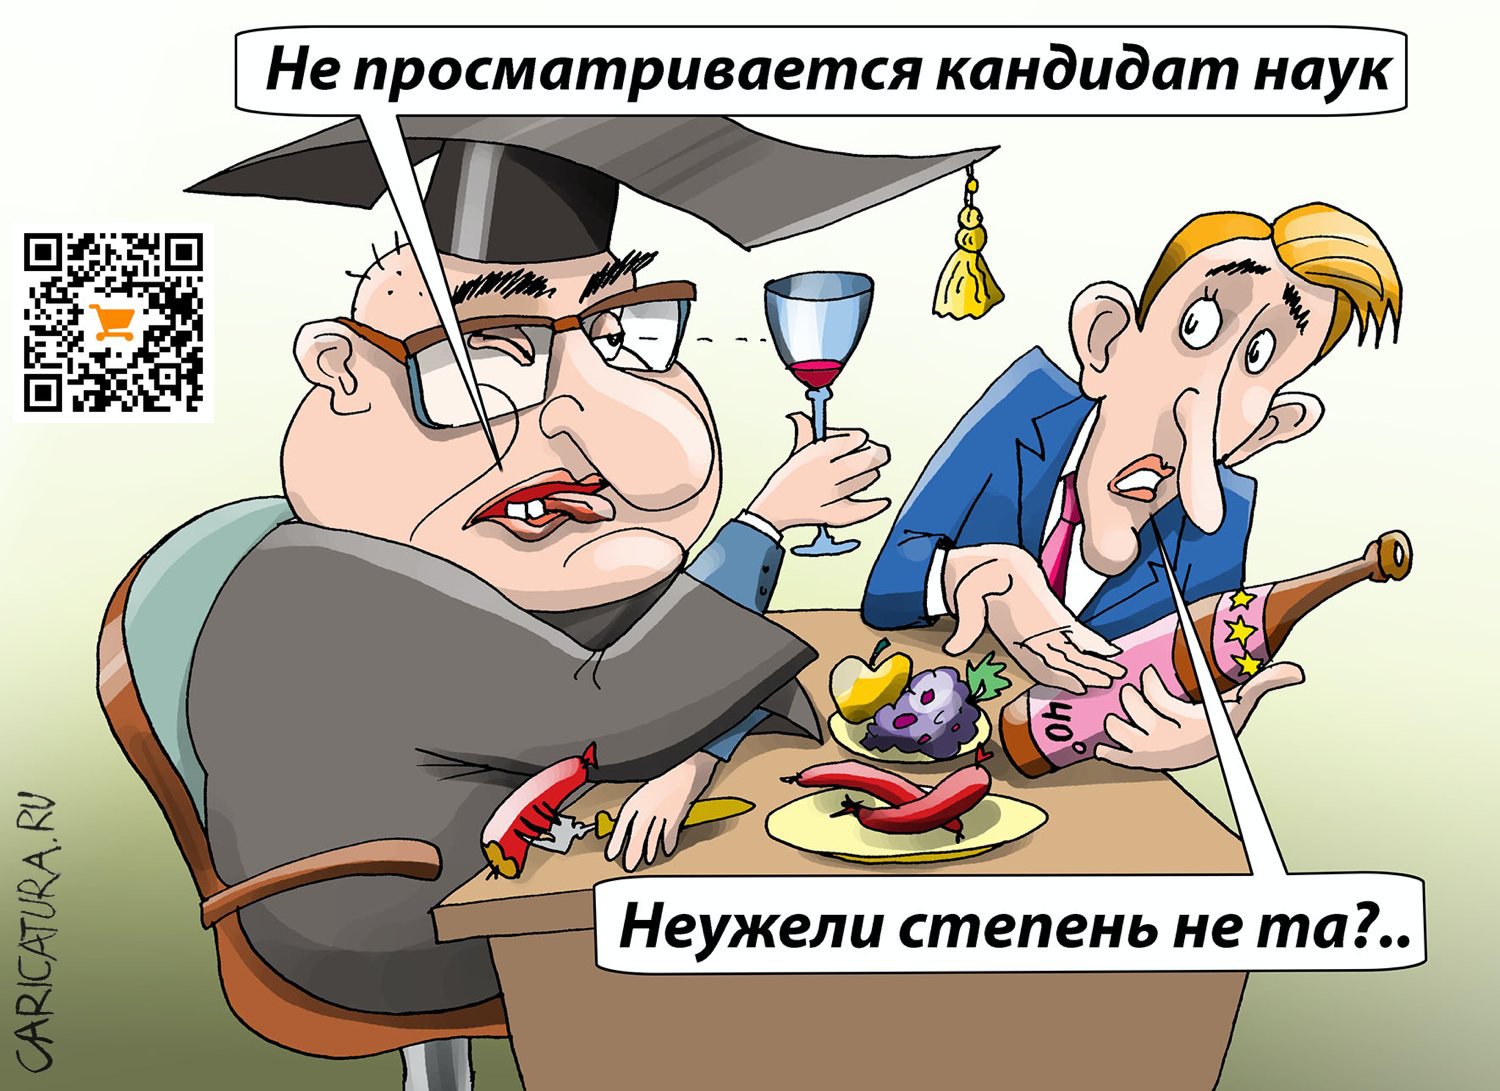 Карикатура "Степени от щедрой поляны", Евгений Кран